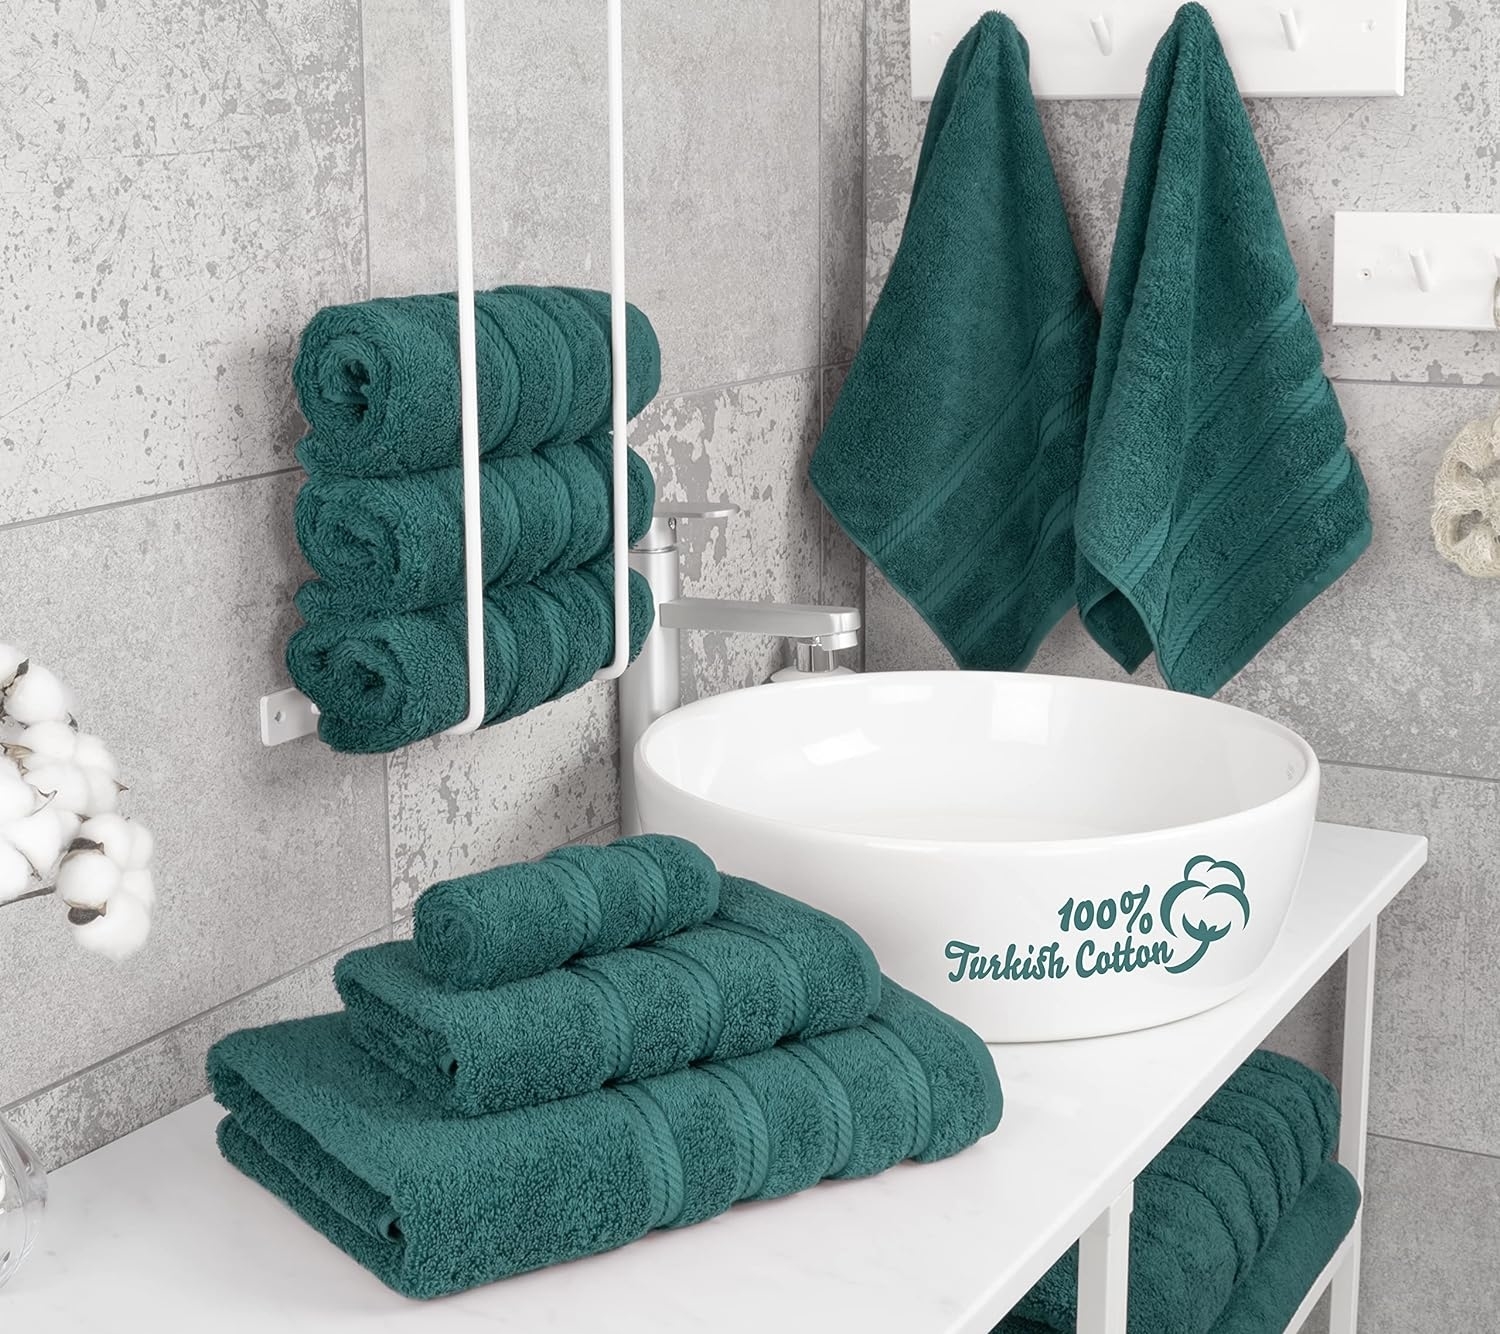 green towels arranged in a bathroom